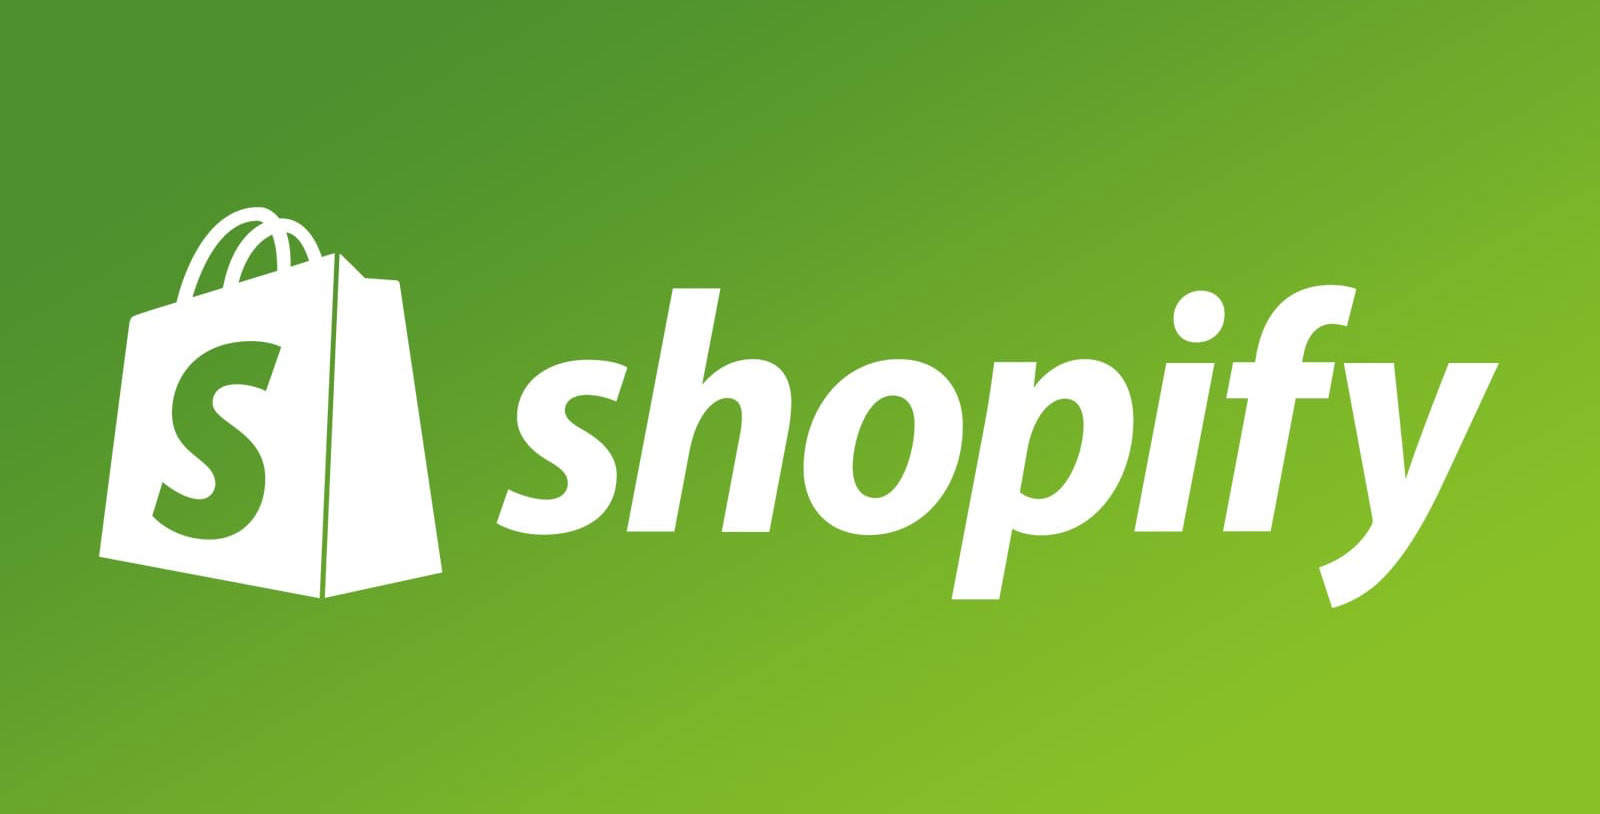 【Shopify】热门优质主题与插件汇总 持续更新插图-WordPress资源海